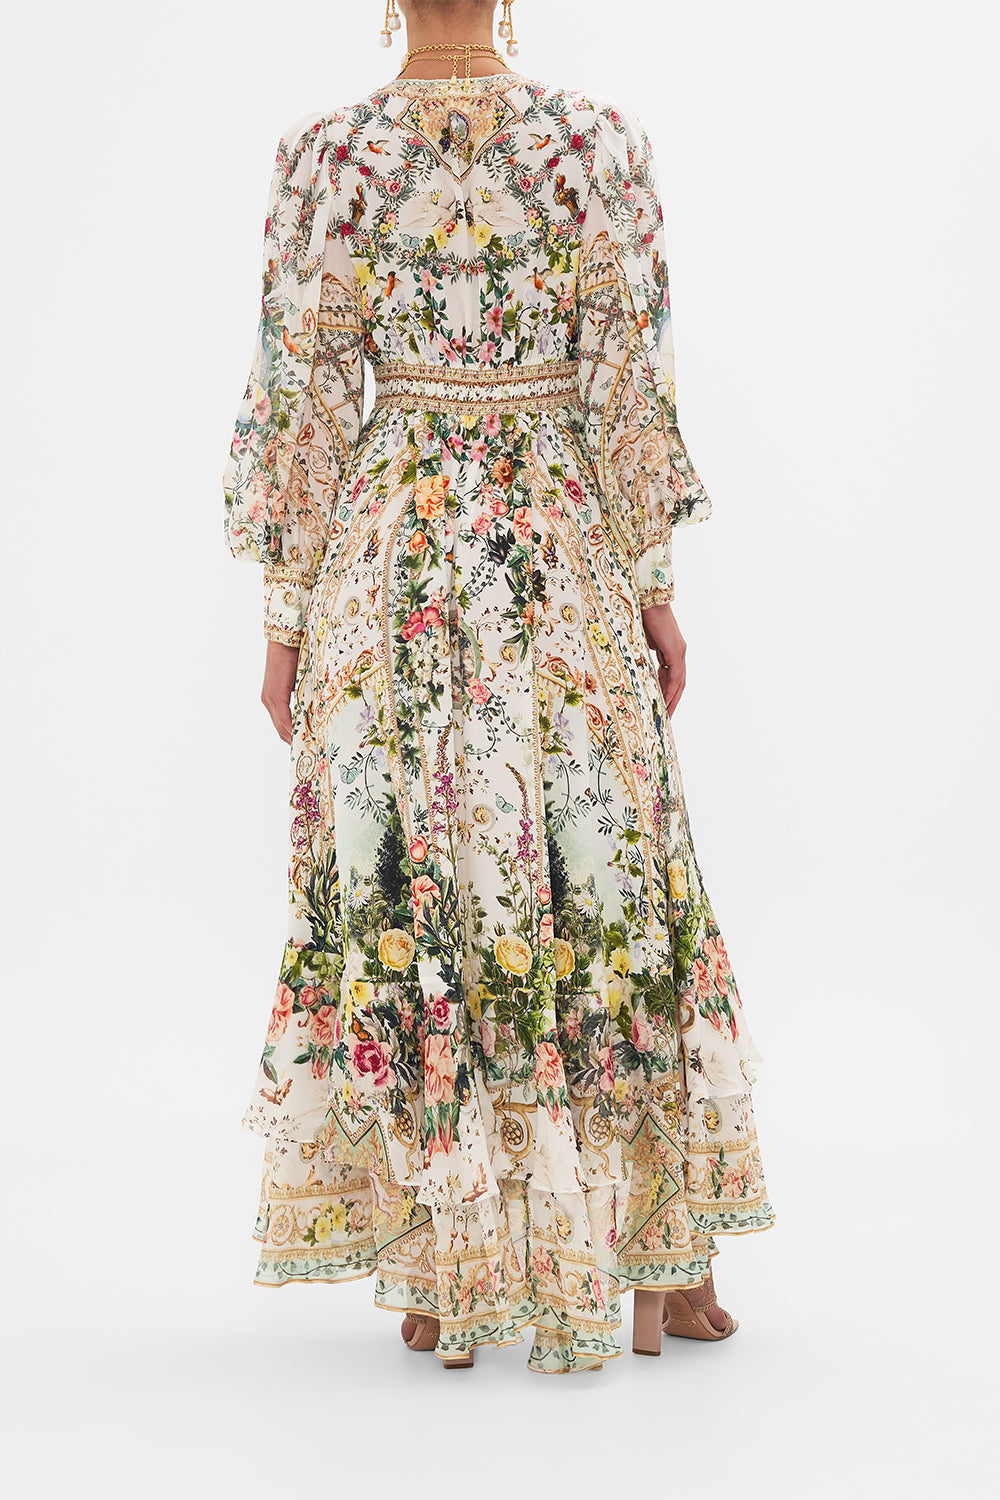 Back view of model wearing CAMILLA silk maxi dress in Renaissance Romance print